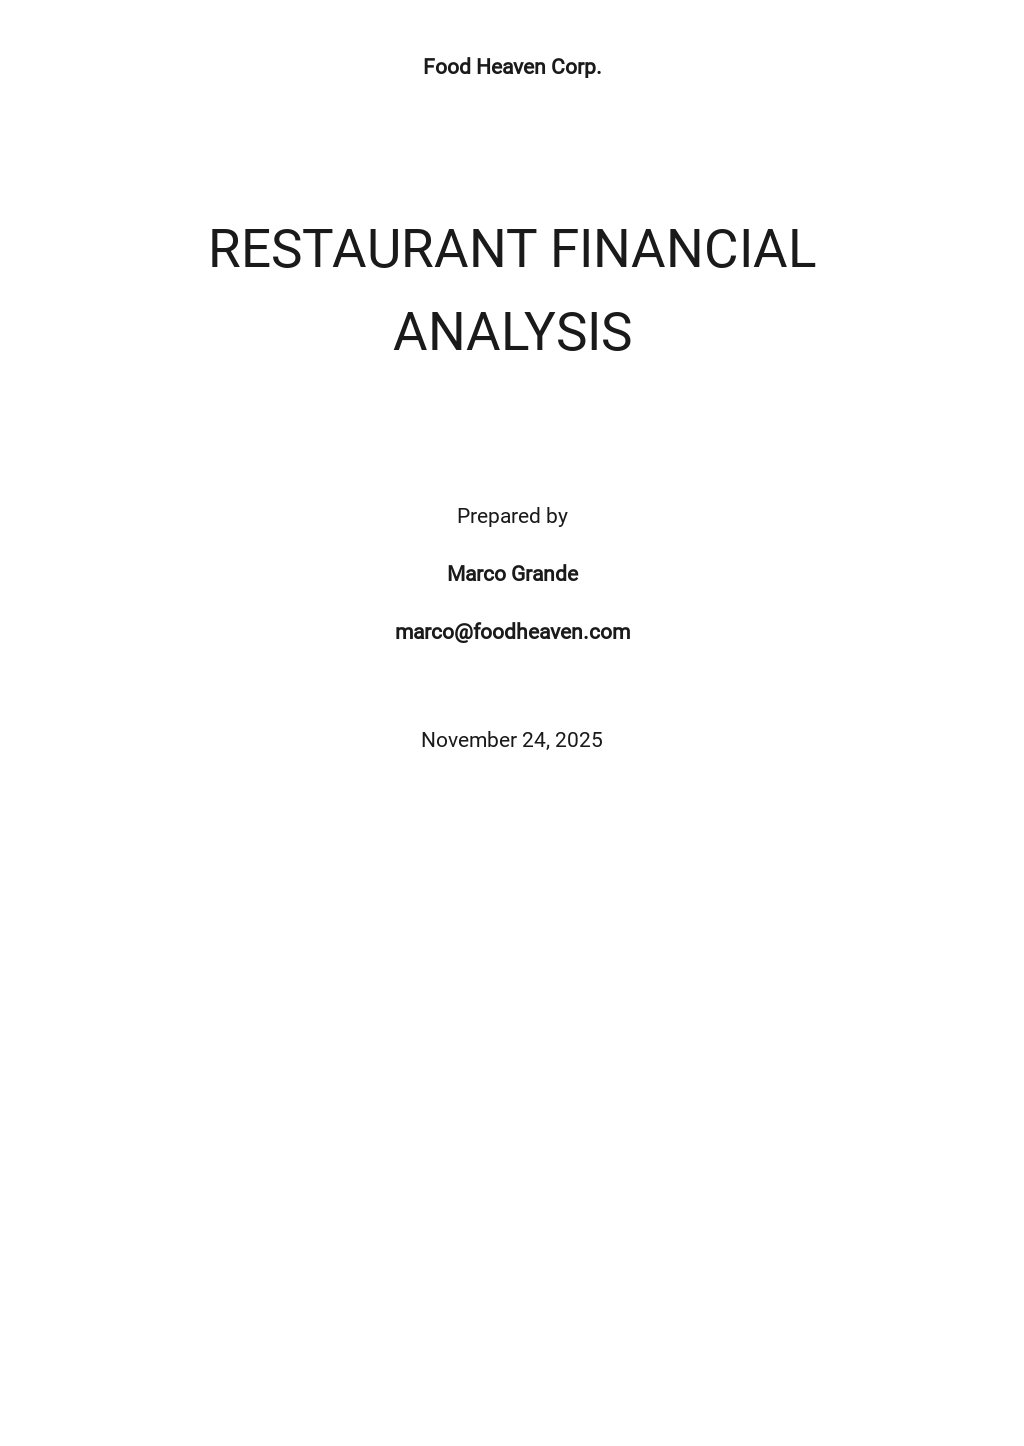 Financial Statement Analysis Template.jpe